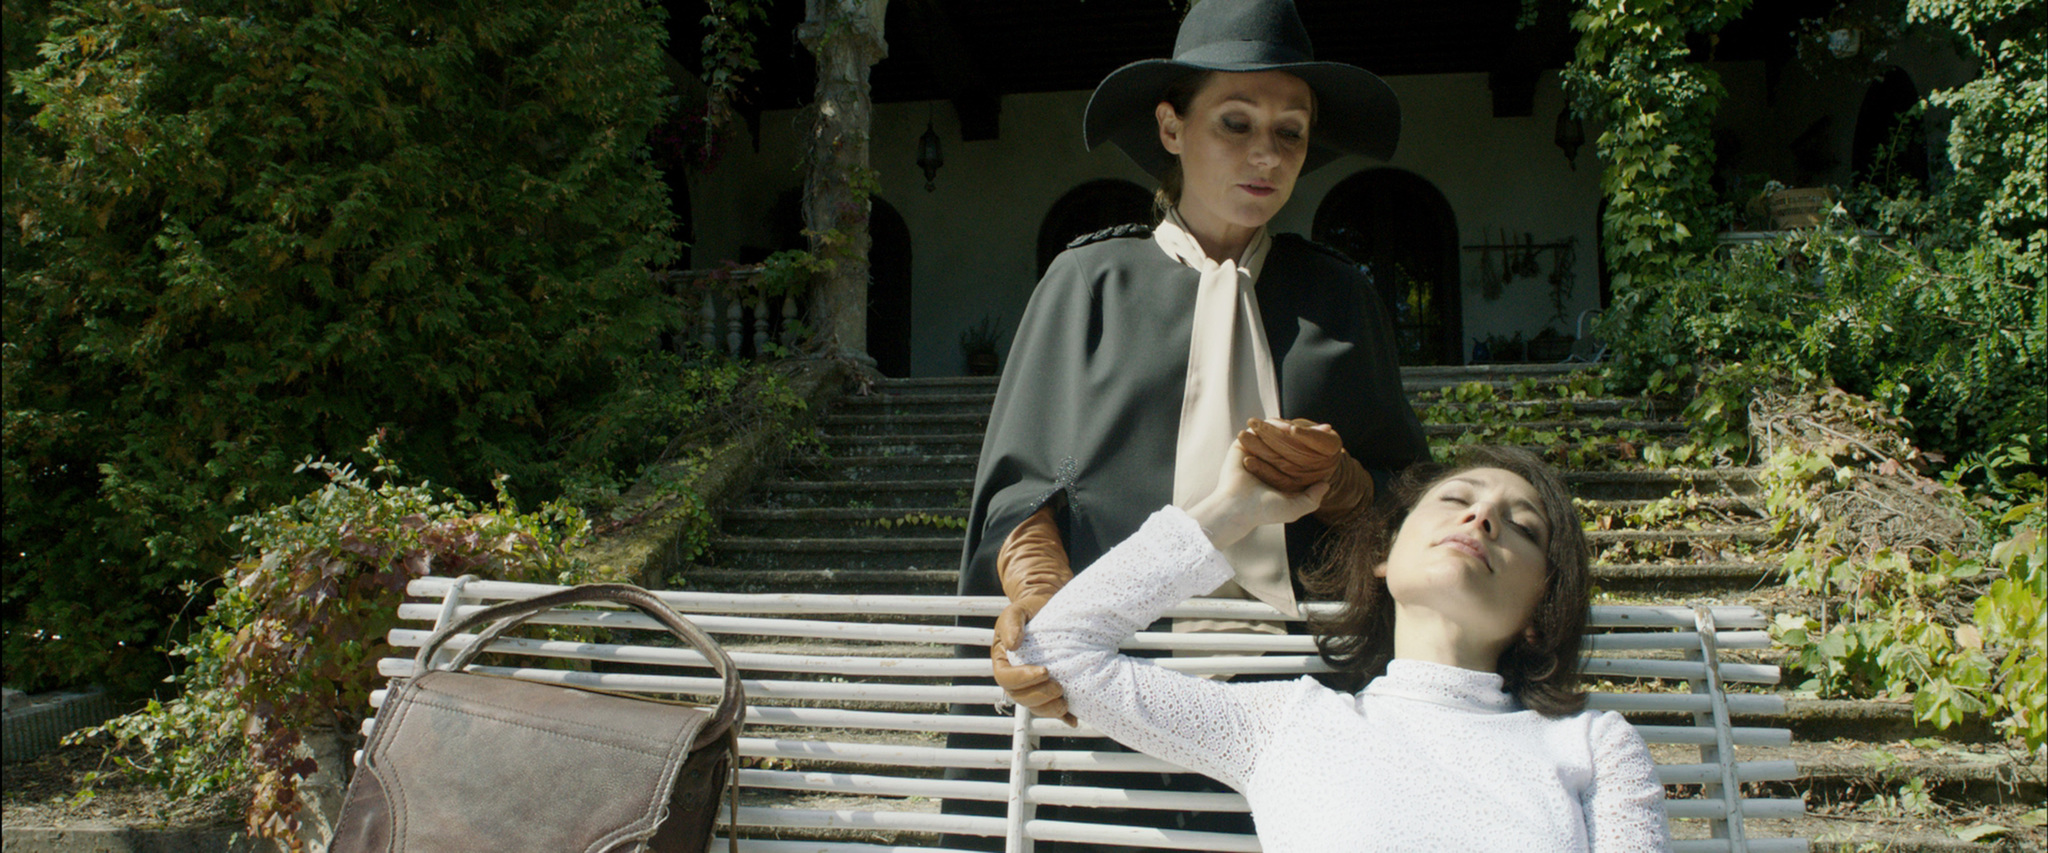 Still of Sidse Babett Knudsen and Chiara D'Anna in The Duke of Burgundy (2014)